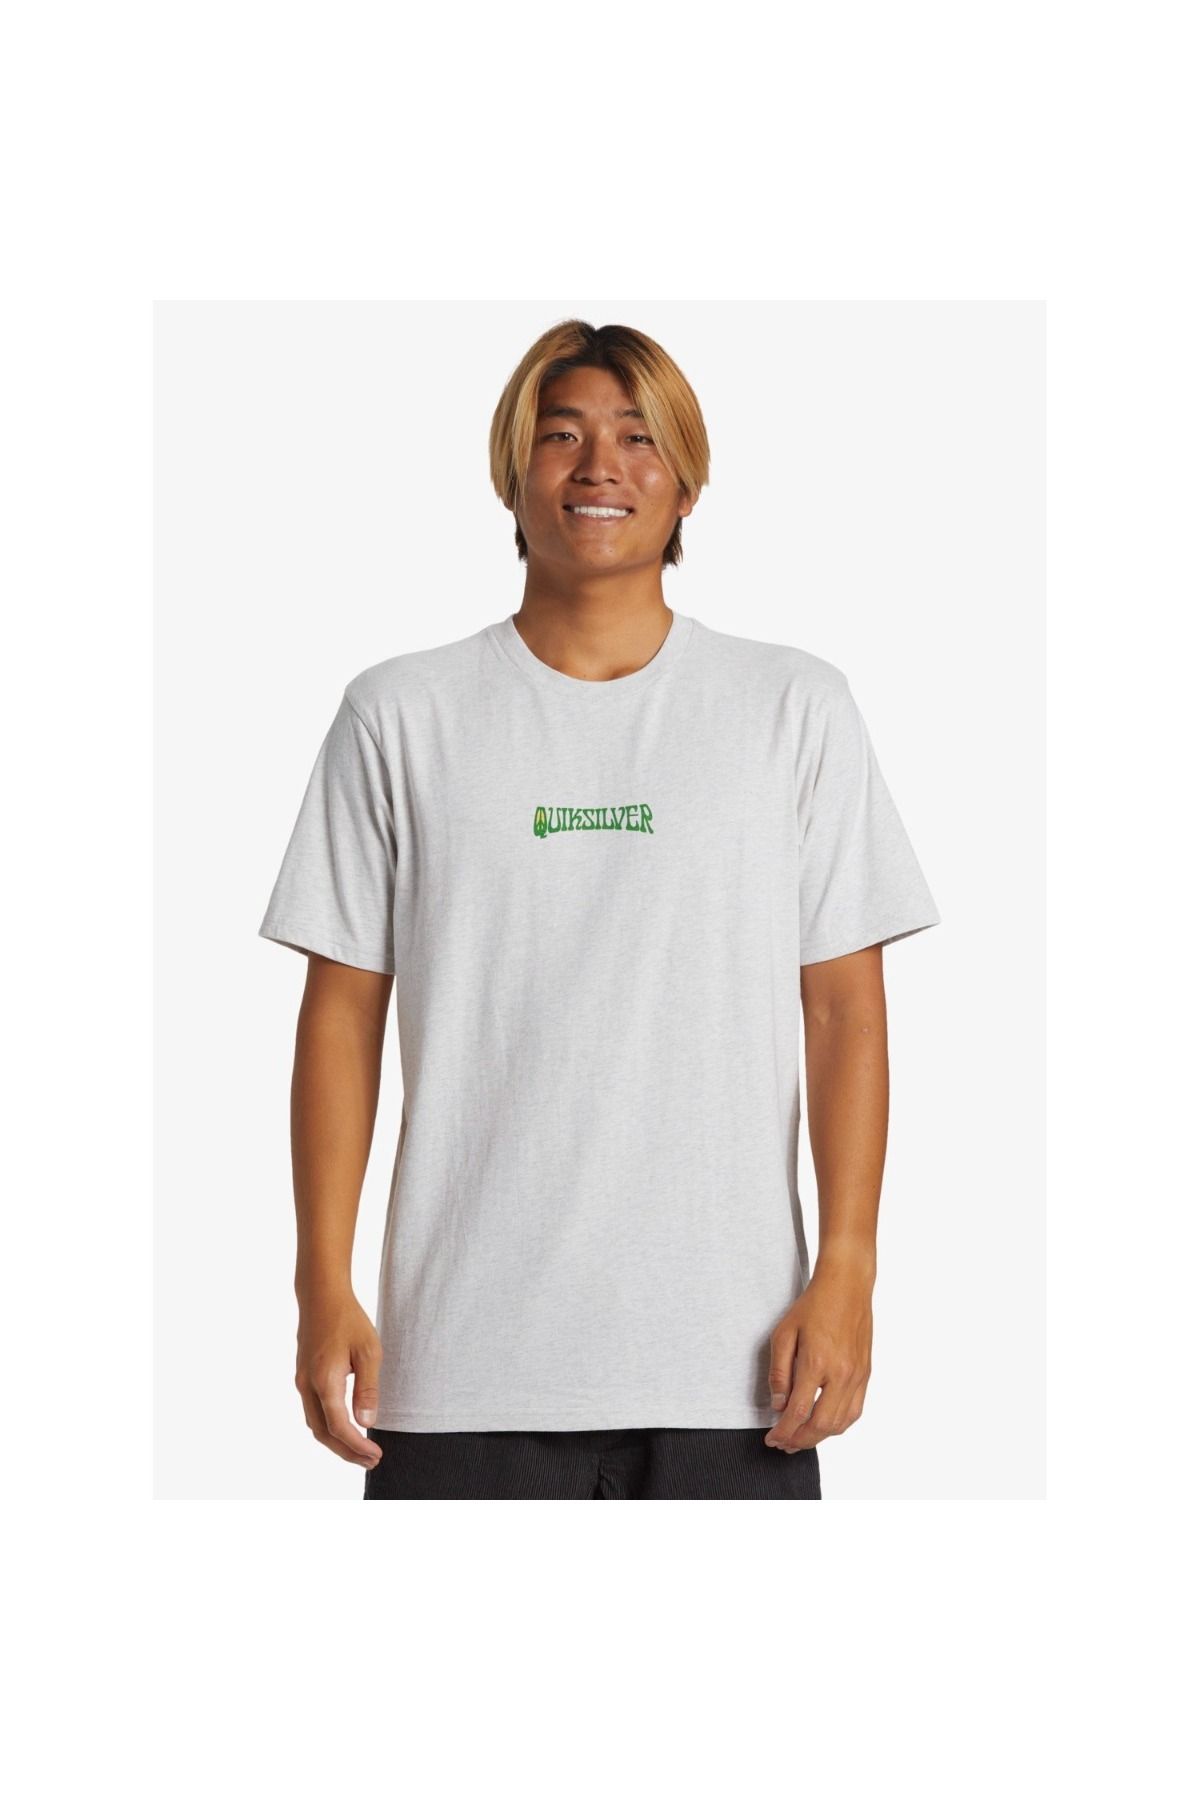 Quiksilver island Sunrise Moe Erkek T-shirt